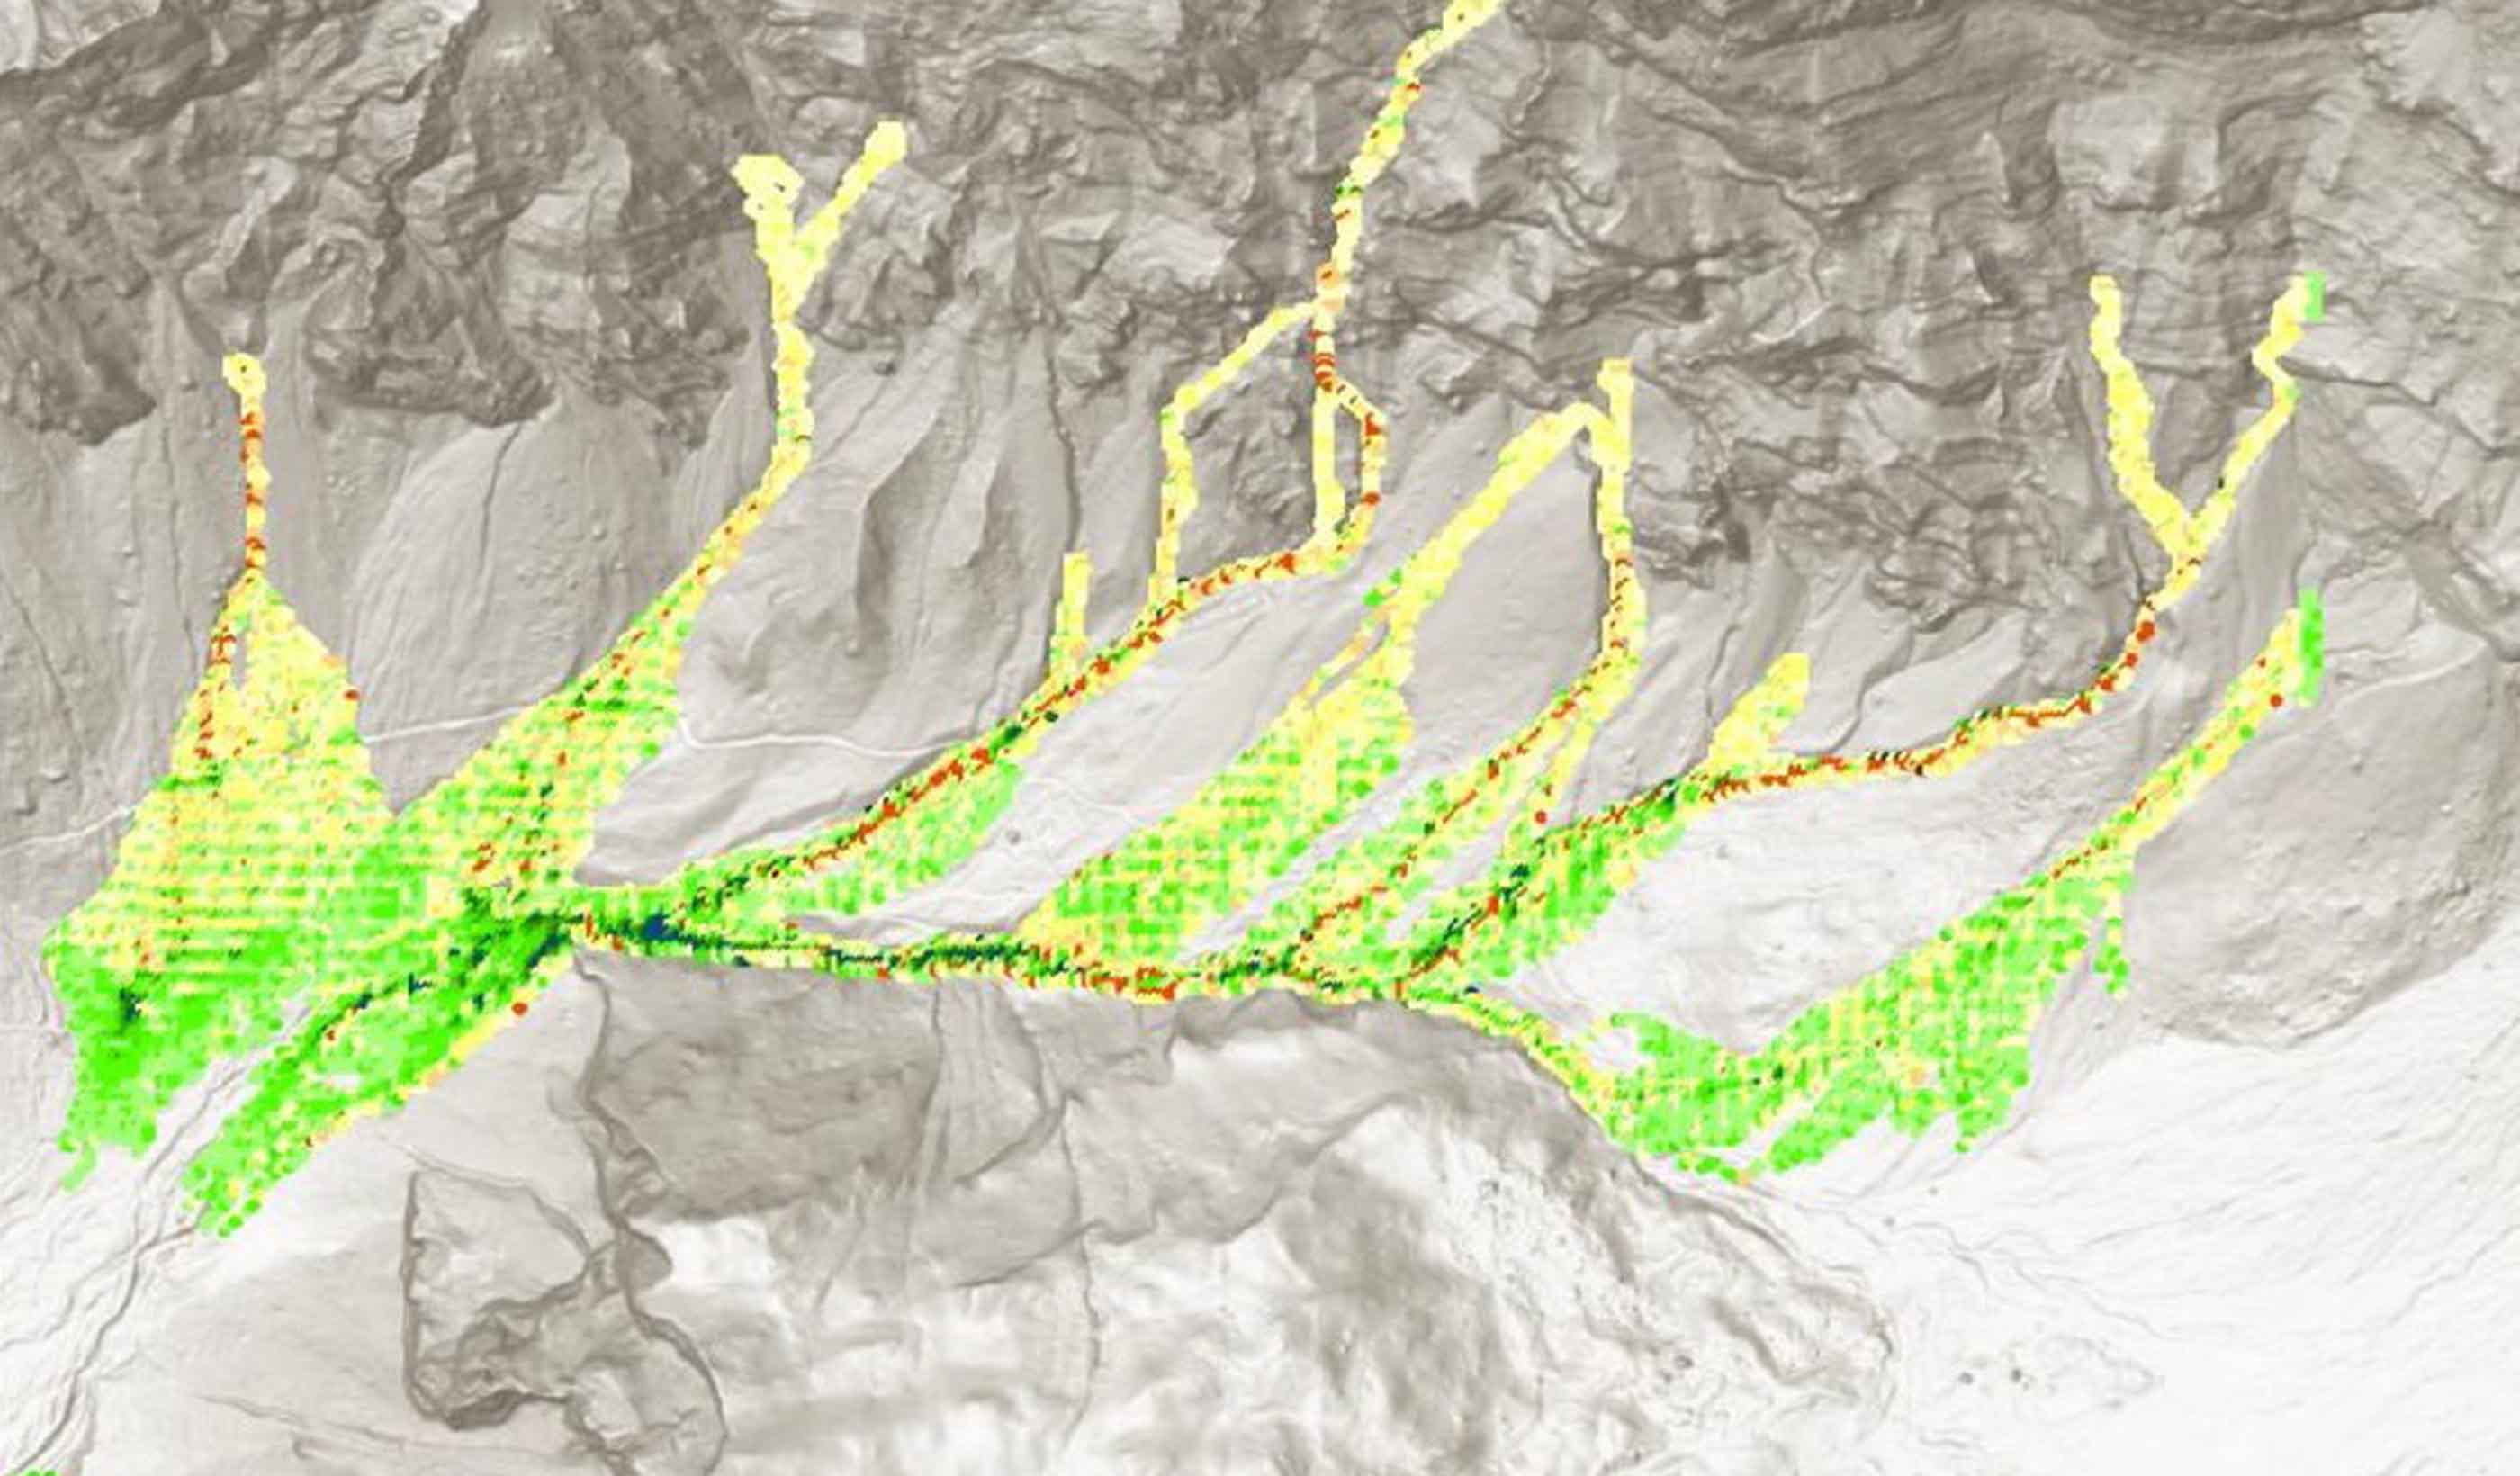 A comparison of two runout programs for debris flow assessment at the Solalex-Anzeindaz region of Switzerland